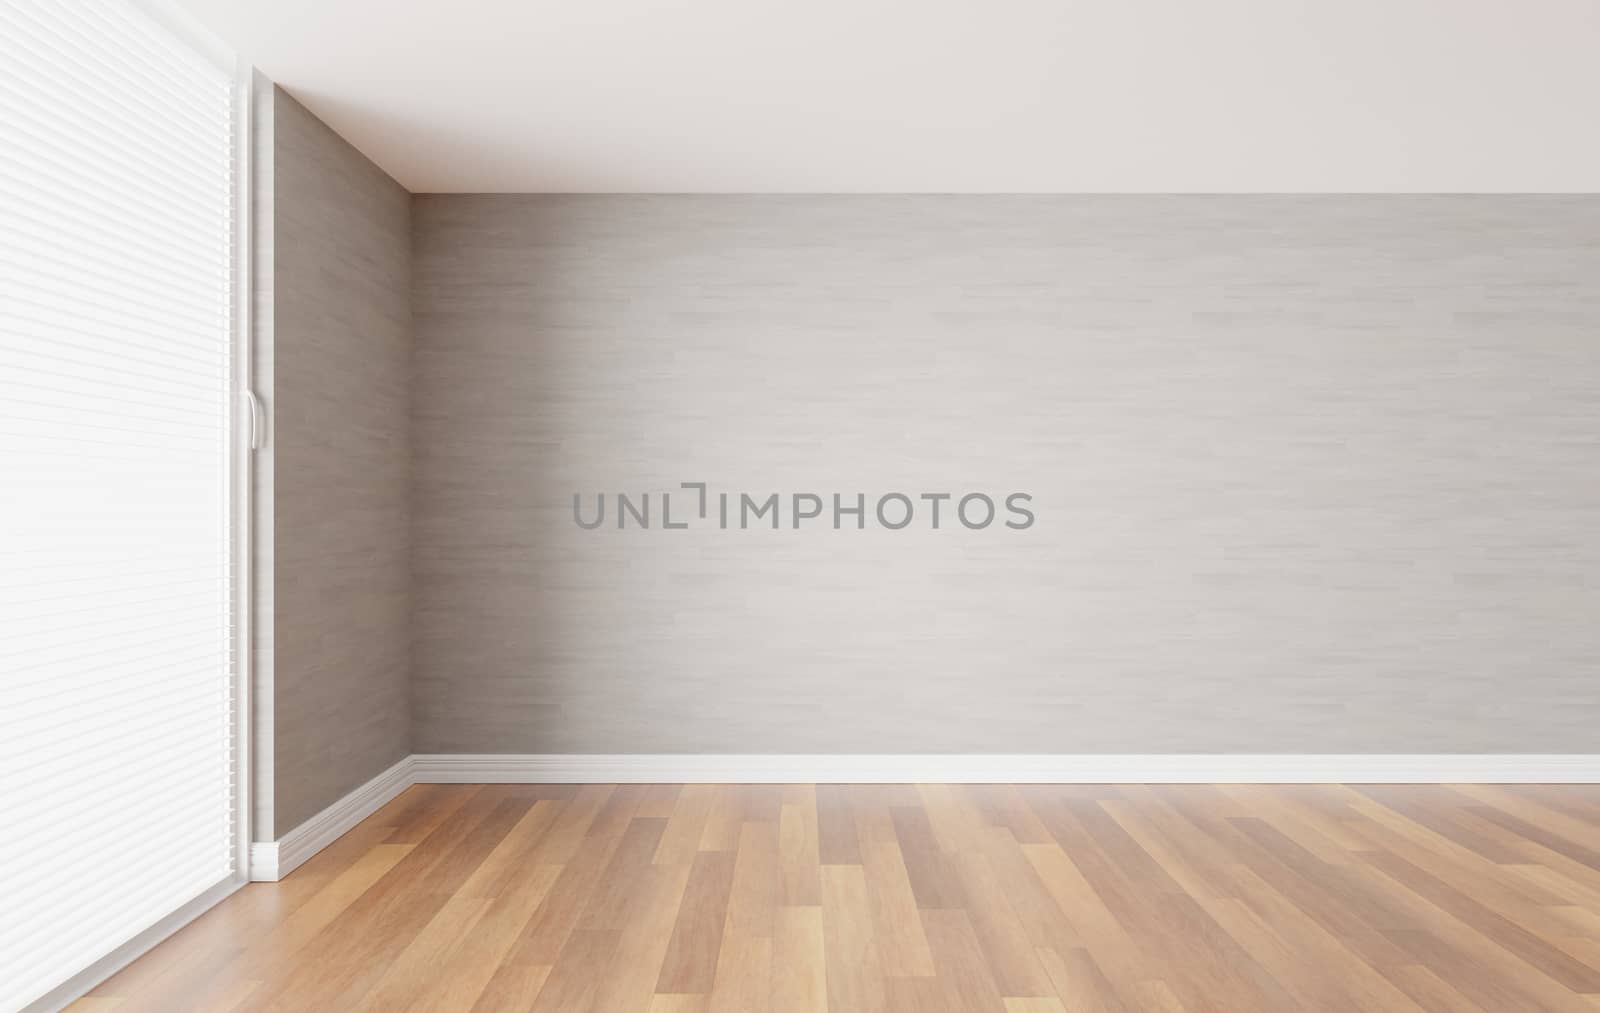 empty room interior 3d render, wooden floor and light gray wall, minimalist background illustration